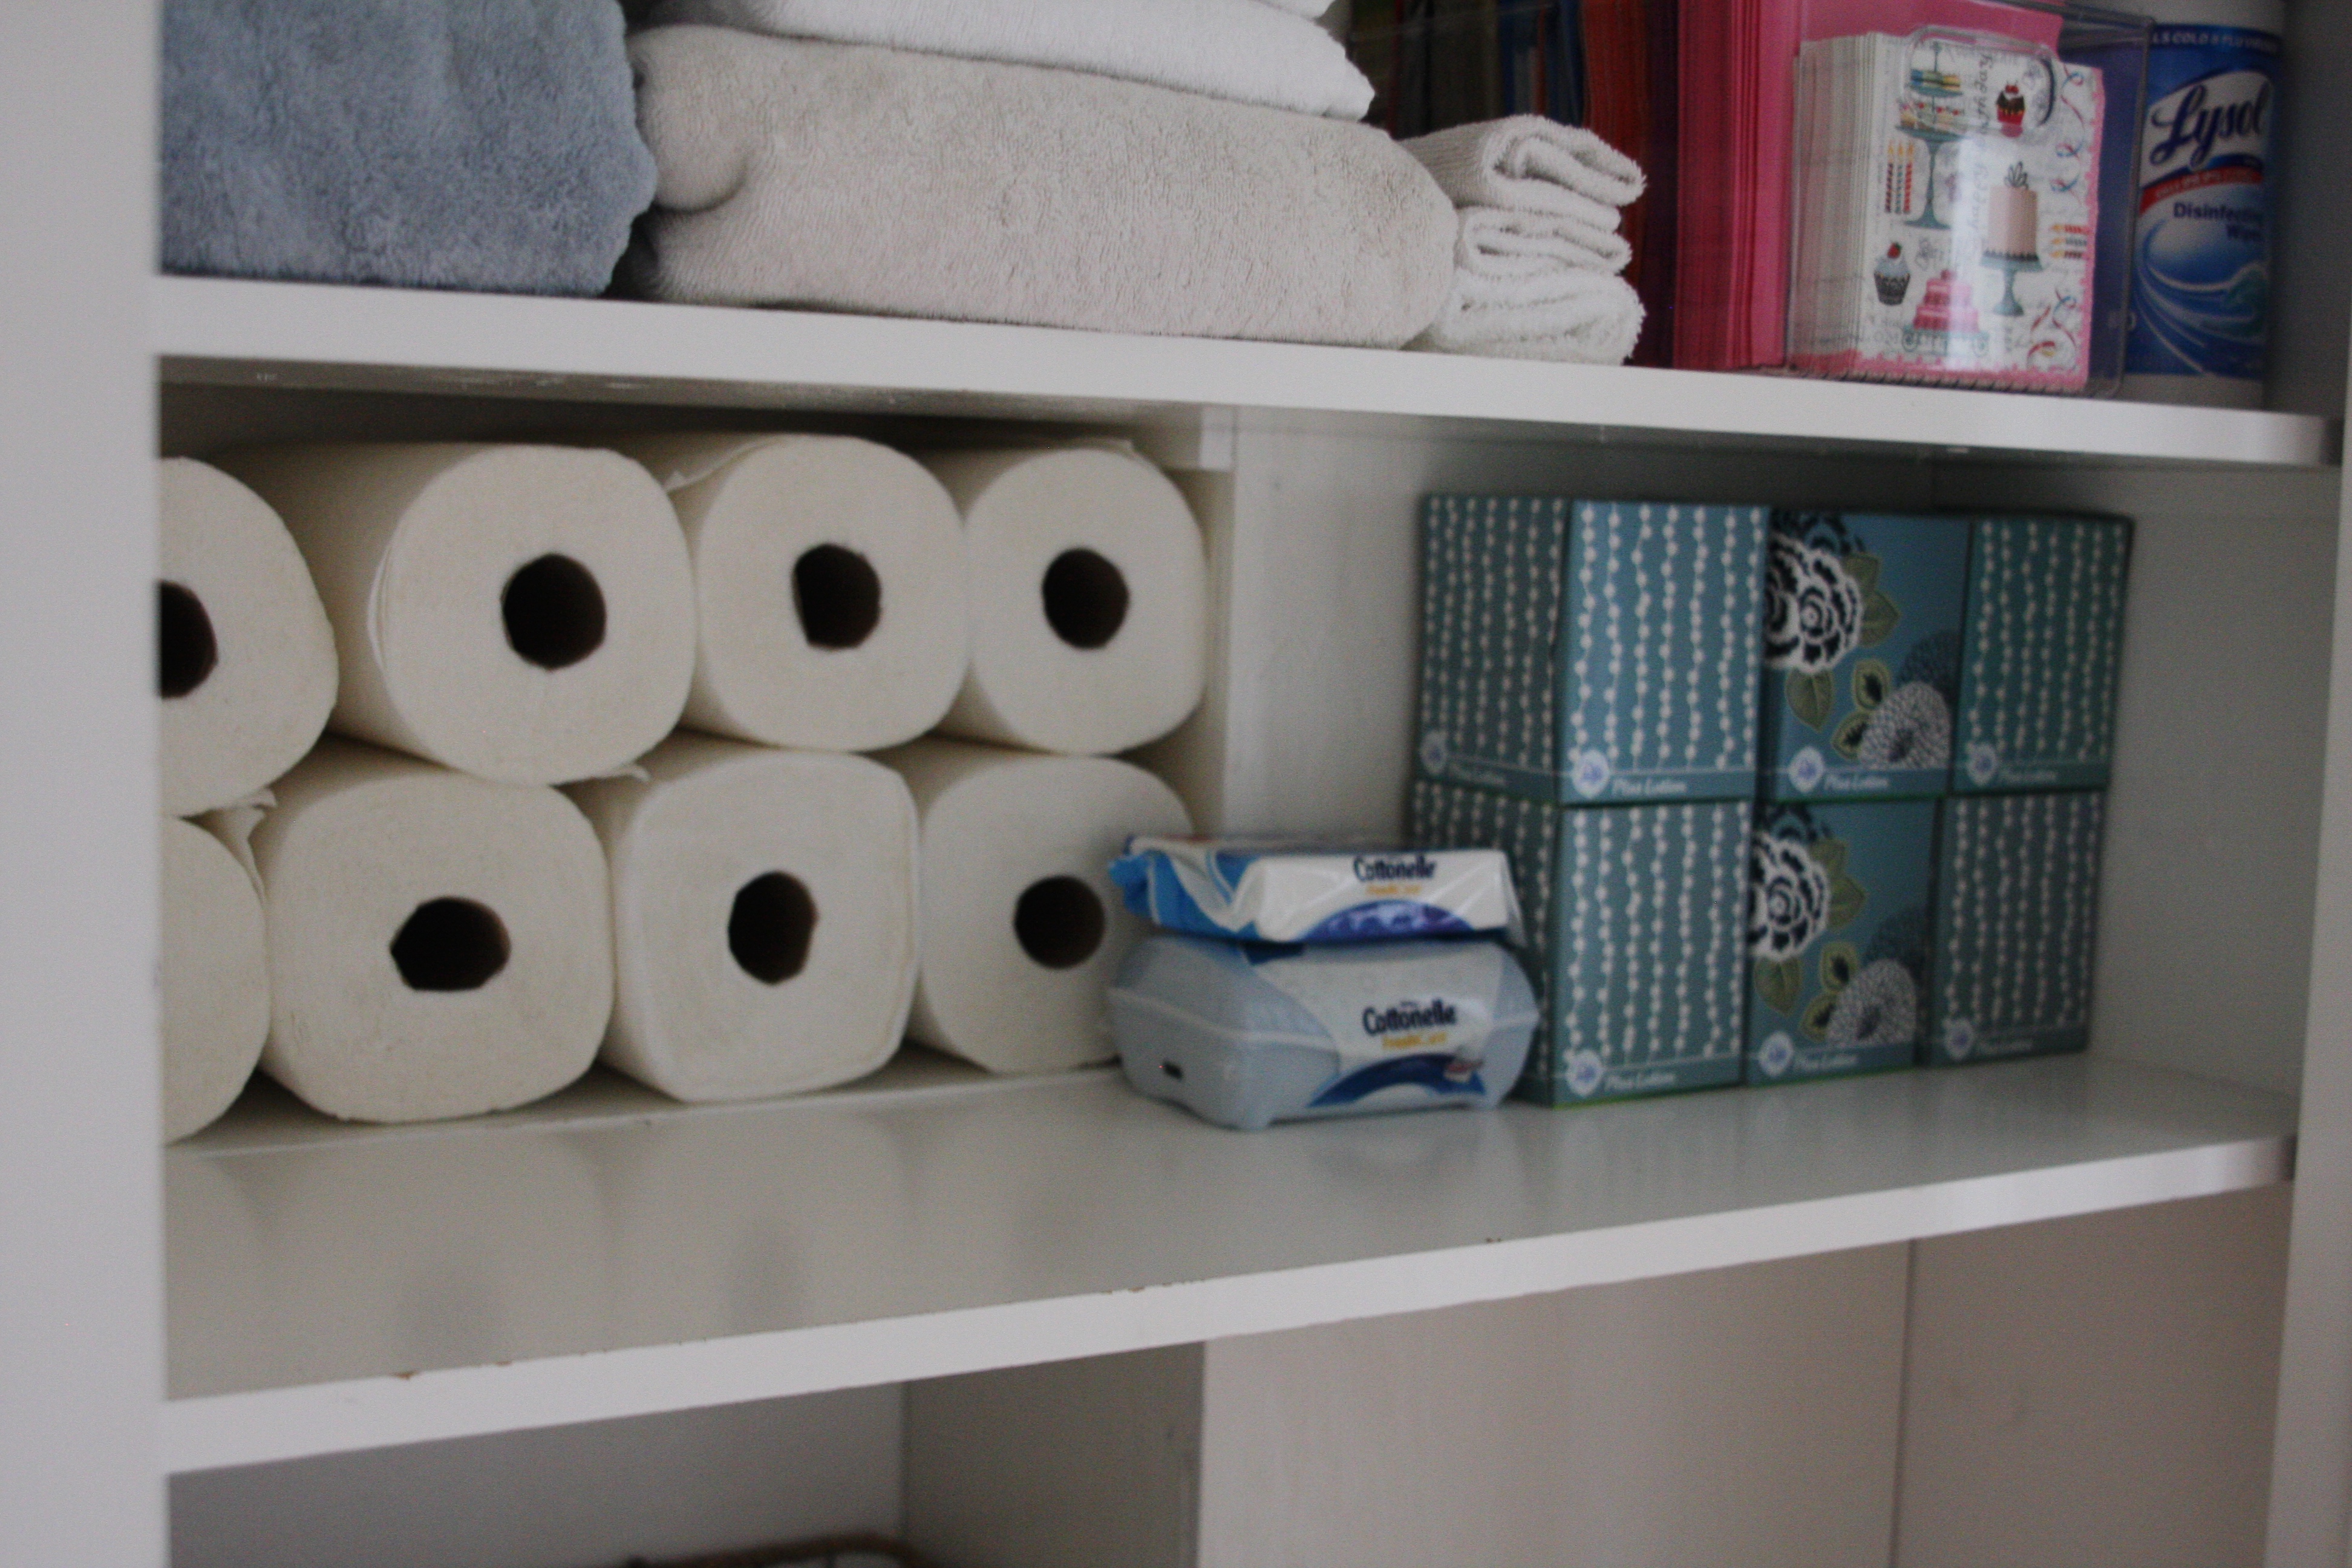 Bathroom Linen Closet Organization - The Simply Organized Home